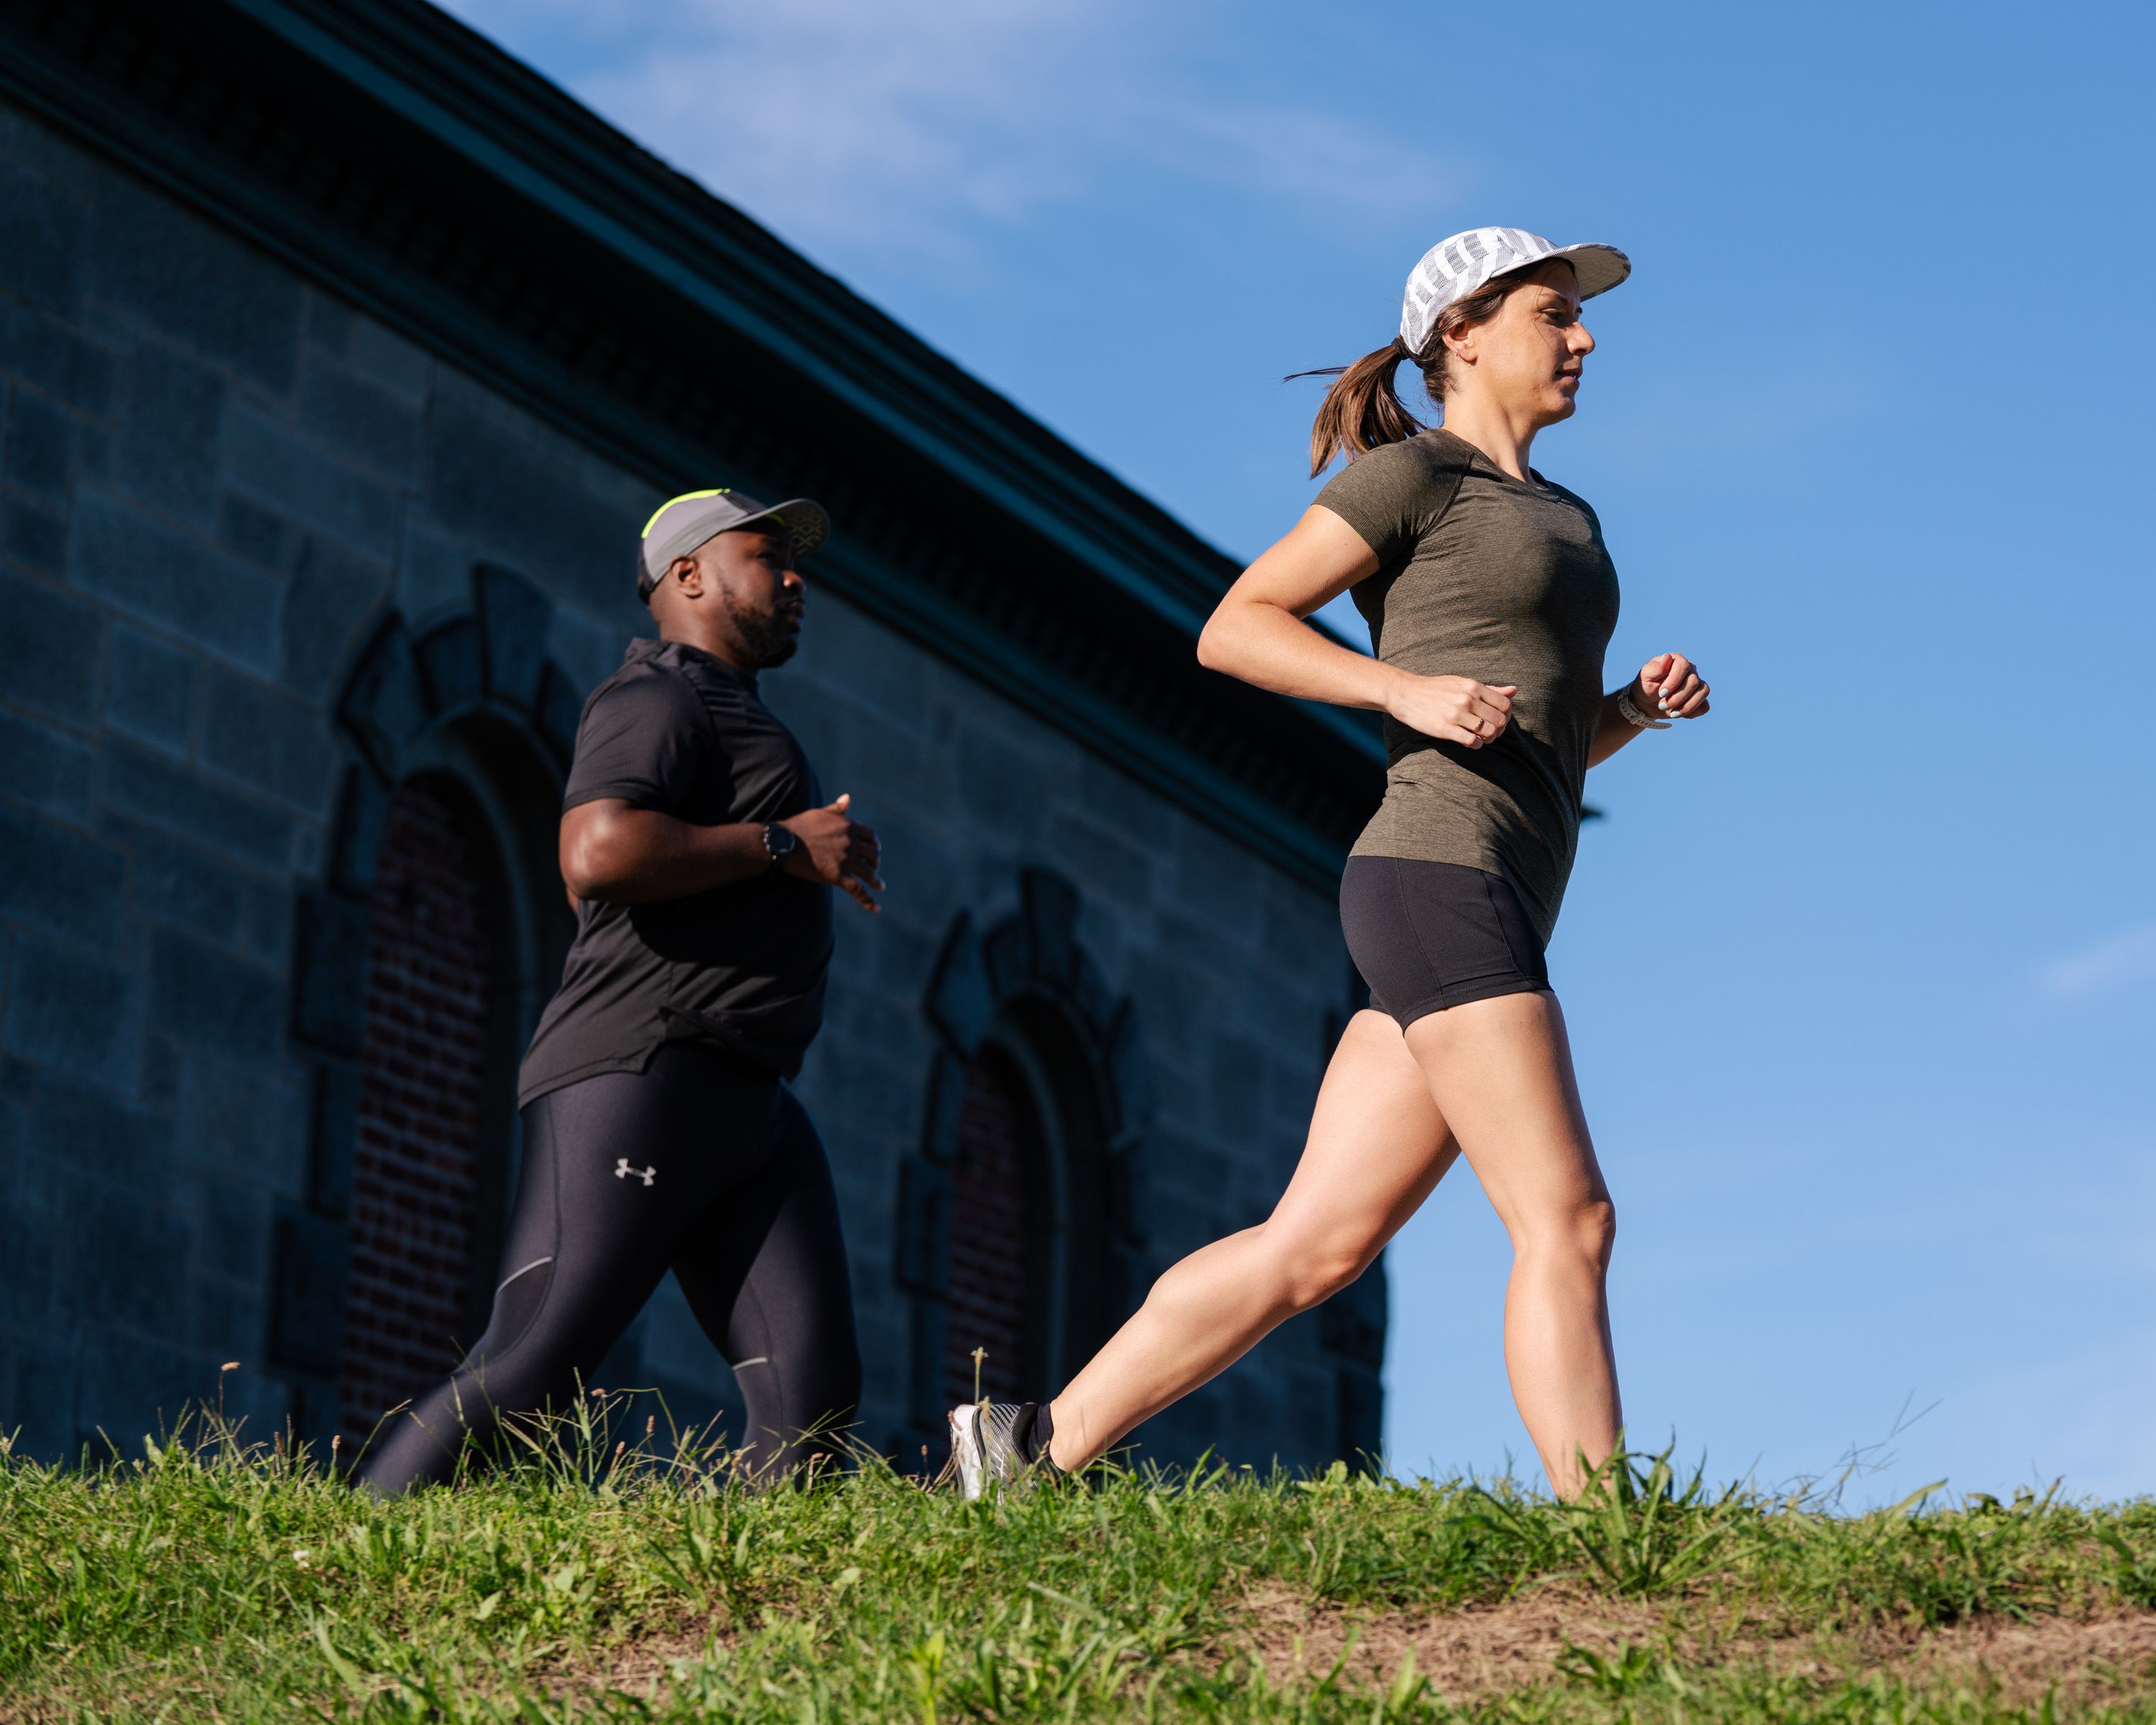 Aerobic vs. Anaerobic Training - Runners Connect